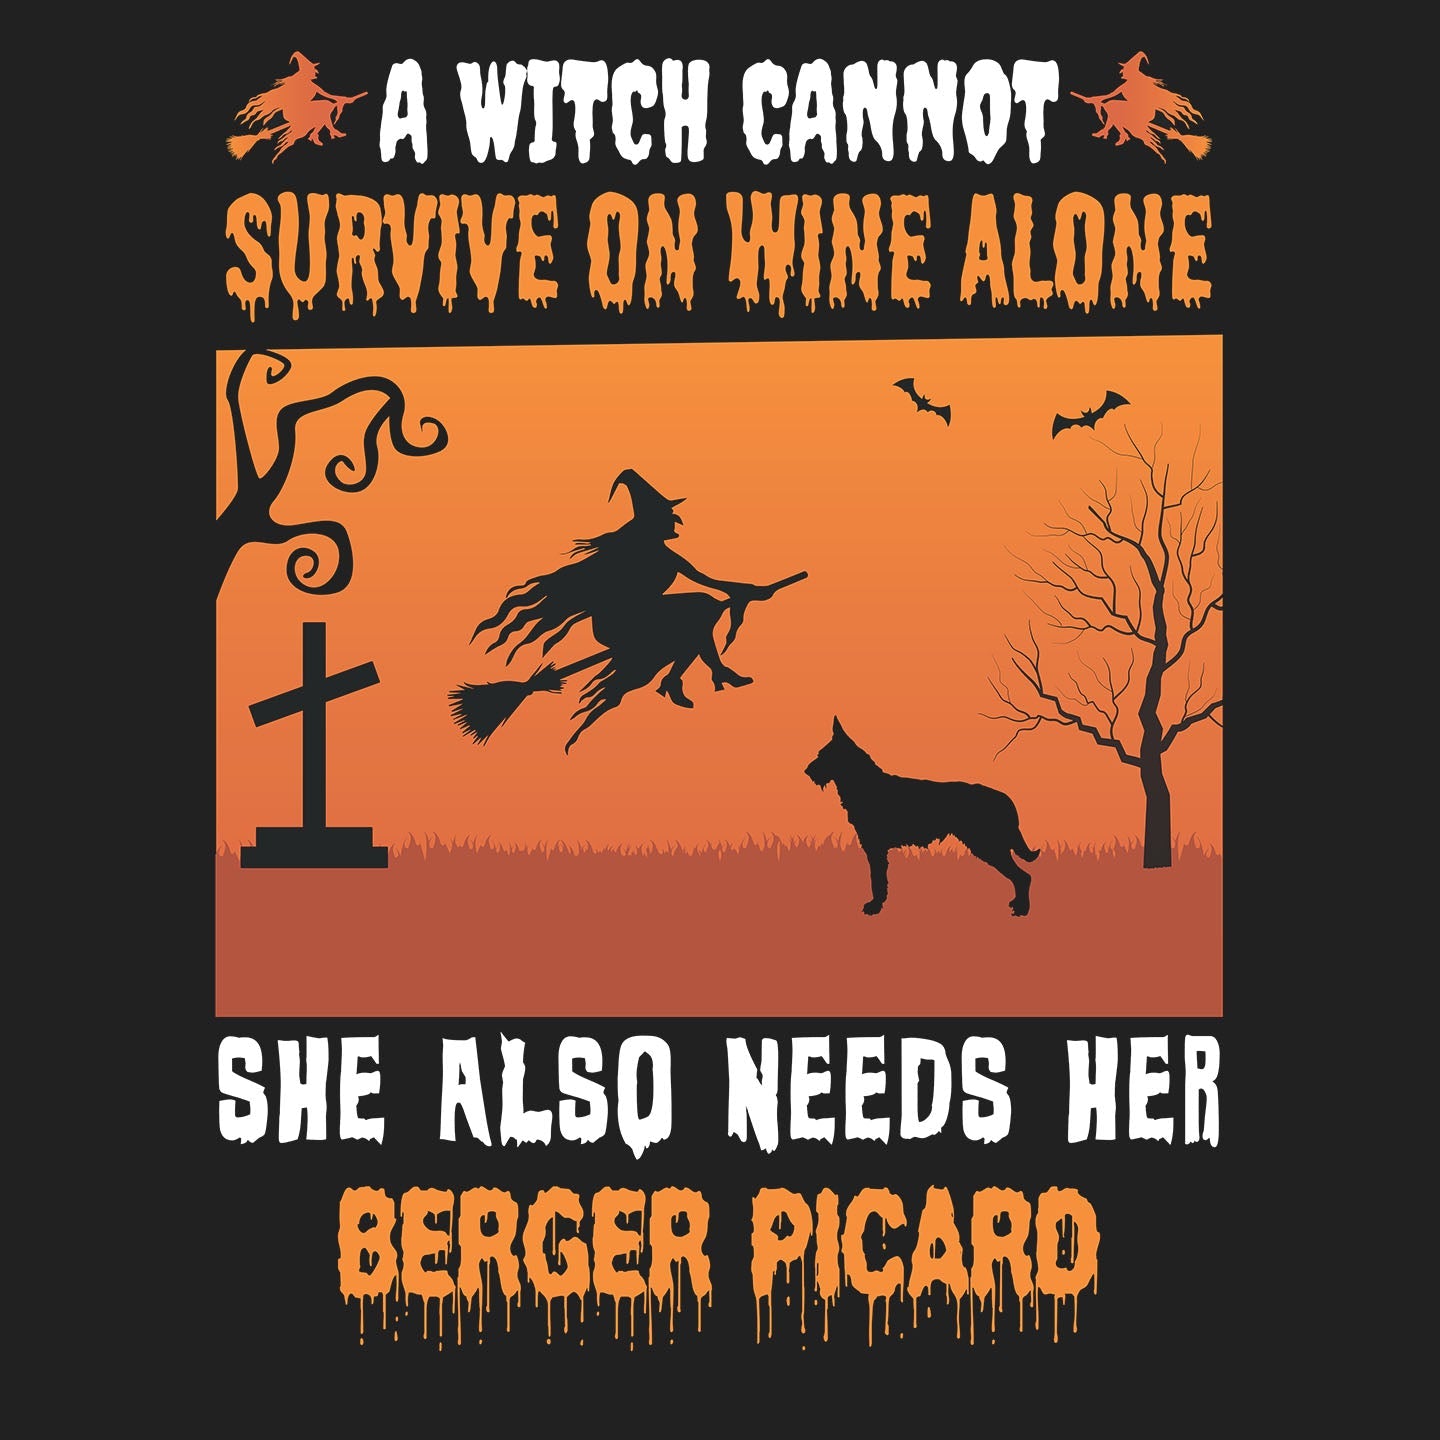 A Witch Needs Her Berger Picard - Women's V-Neck T-Shirt